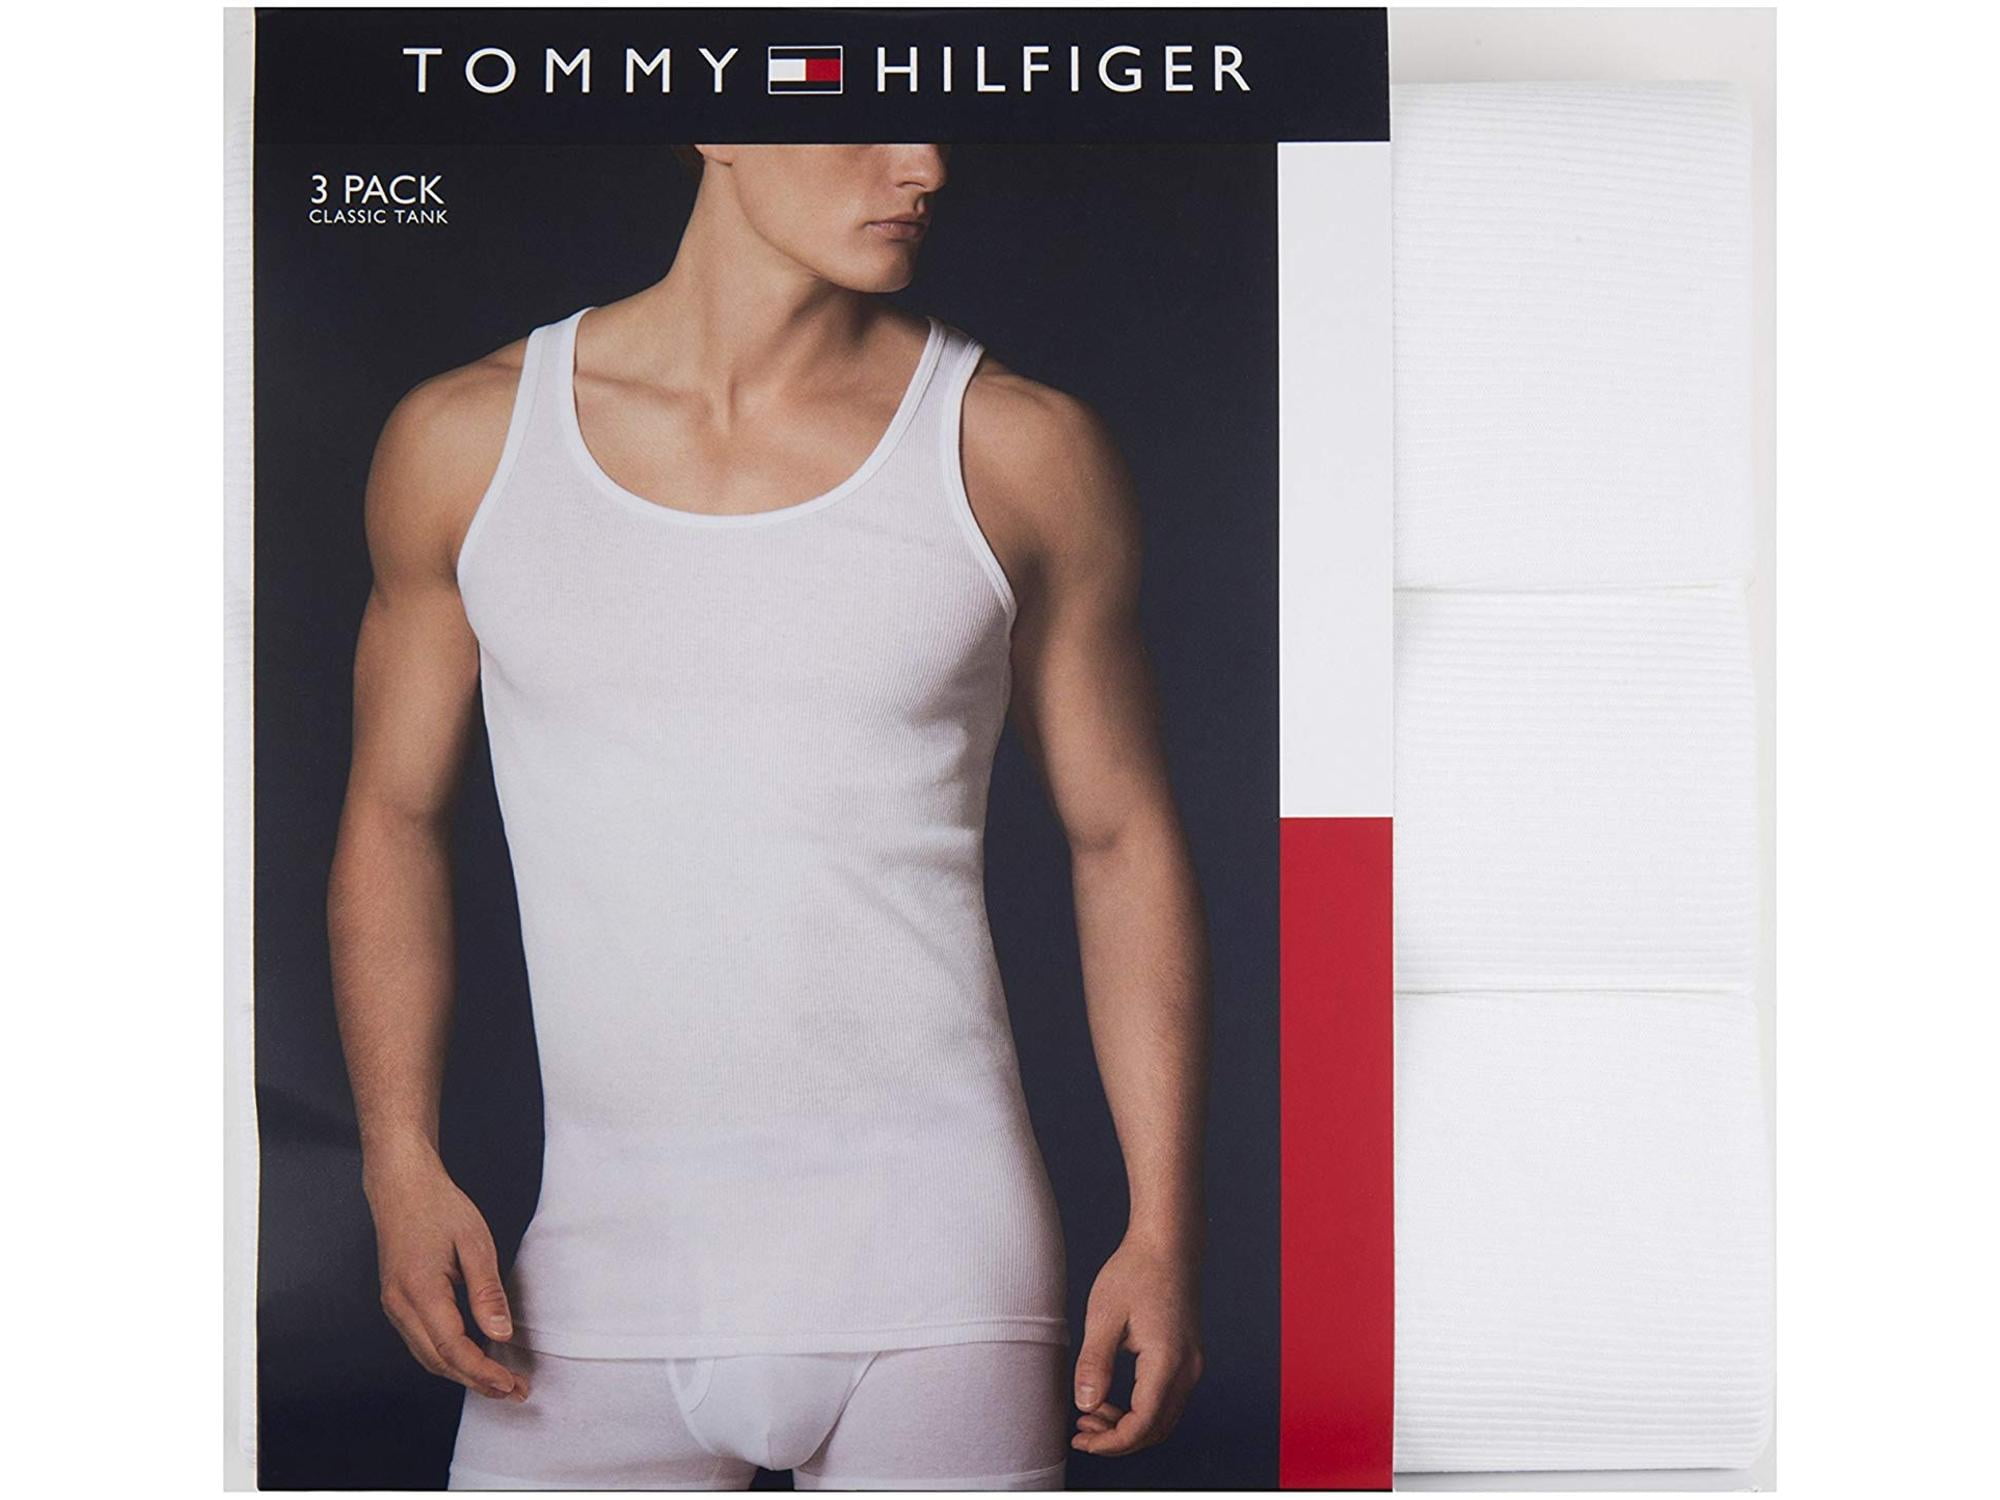 Tommy Hilfiger Men's Undershirts 3 Pack 